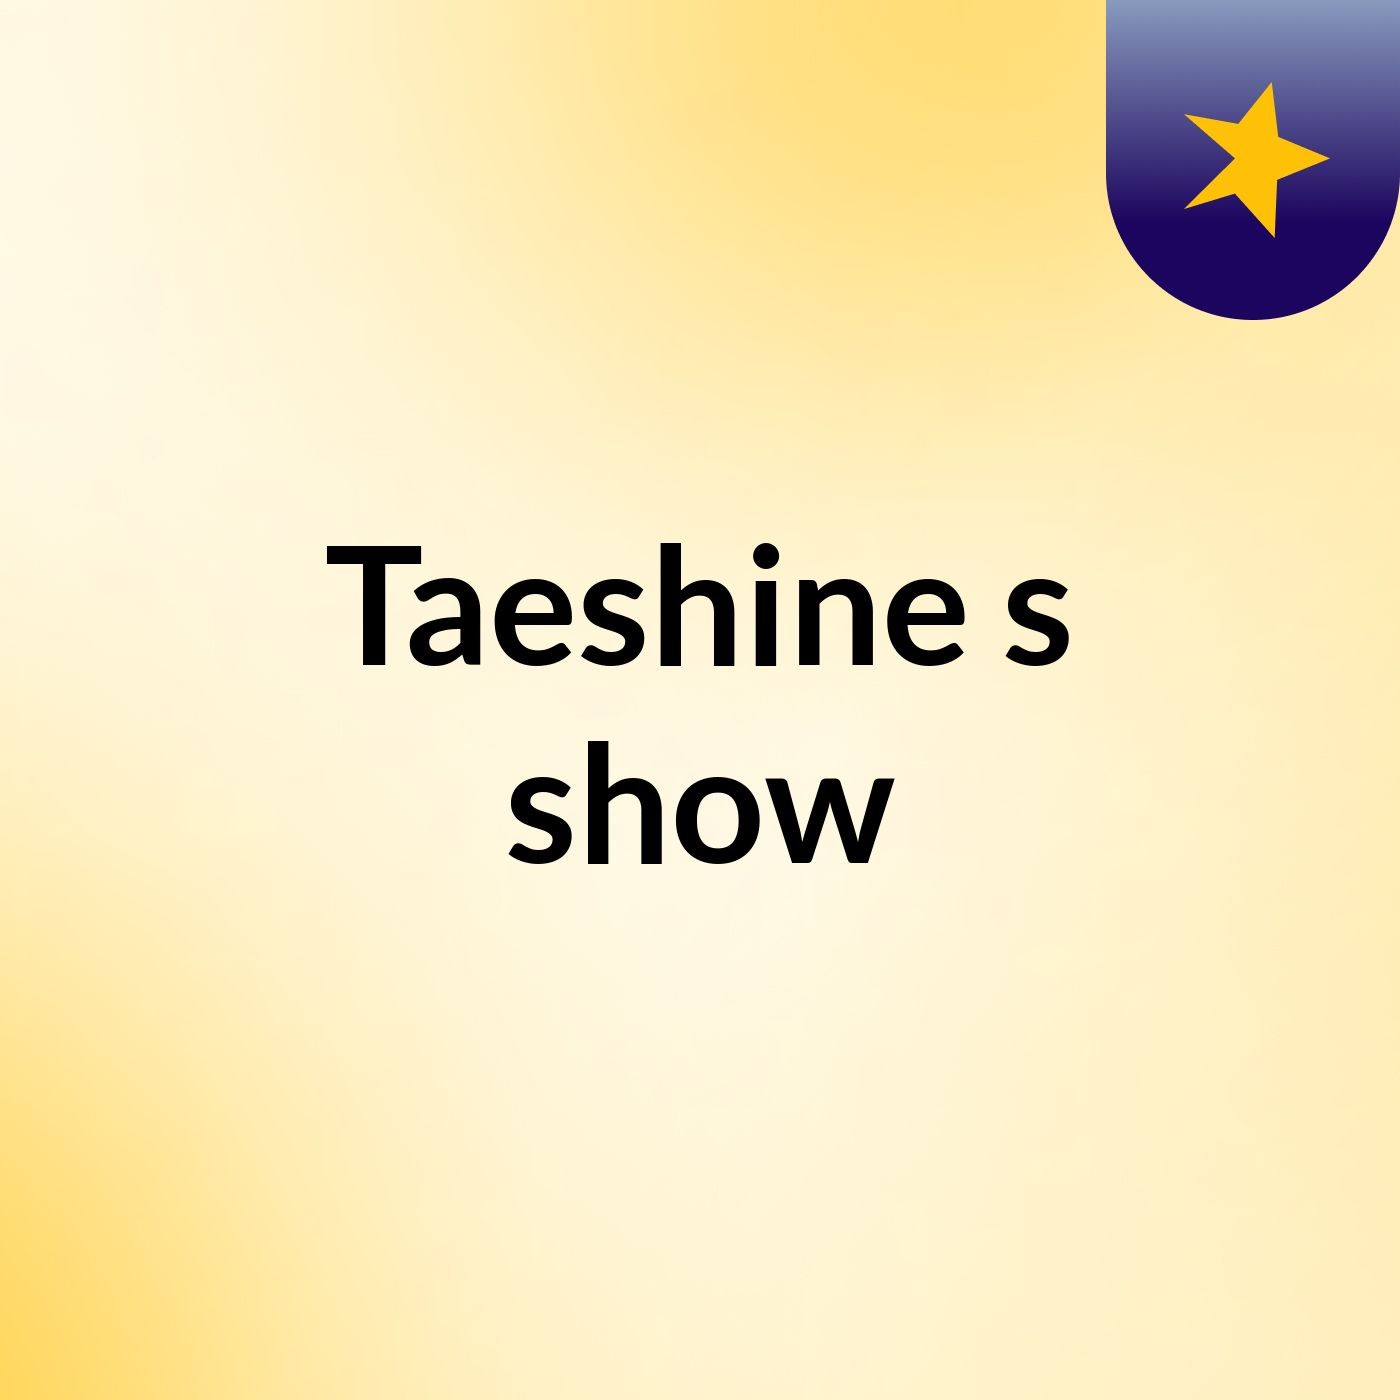 Taeshine's show